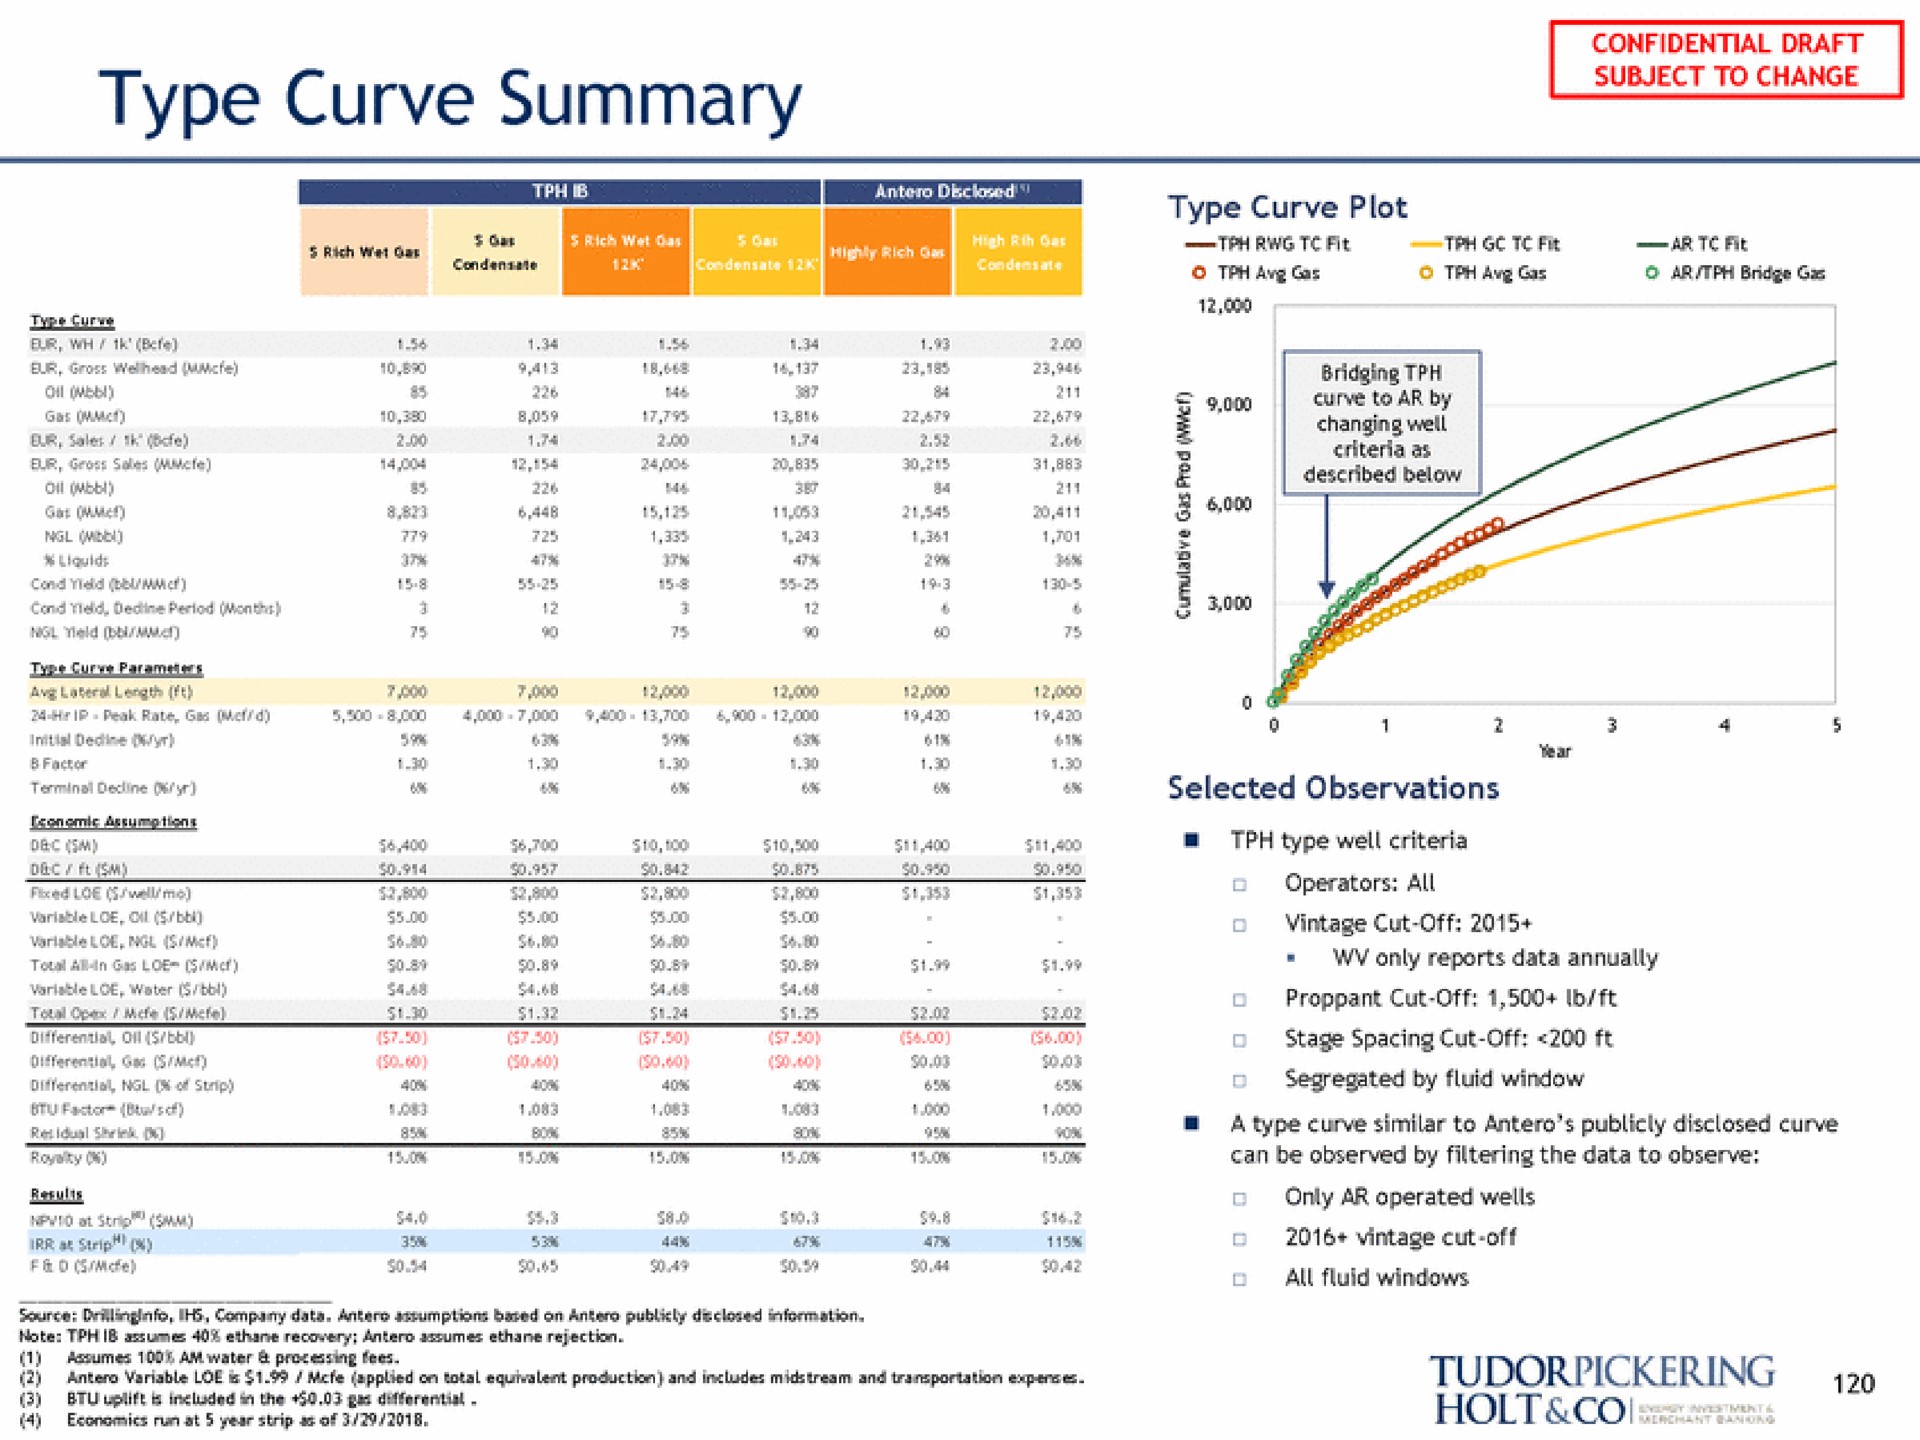 type curve summary holt | Tudor, Pickering, Holt & Co